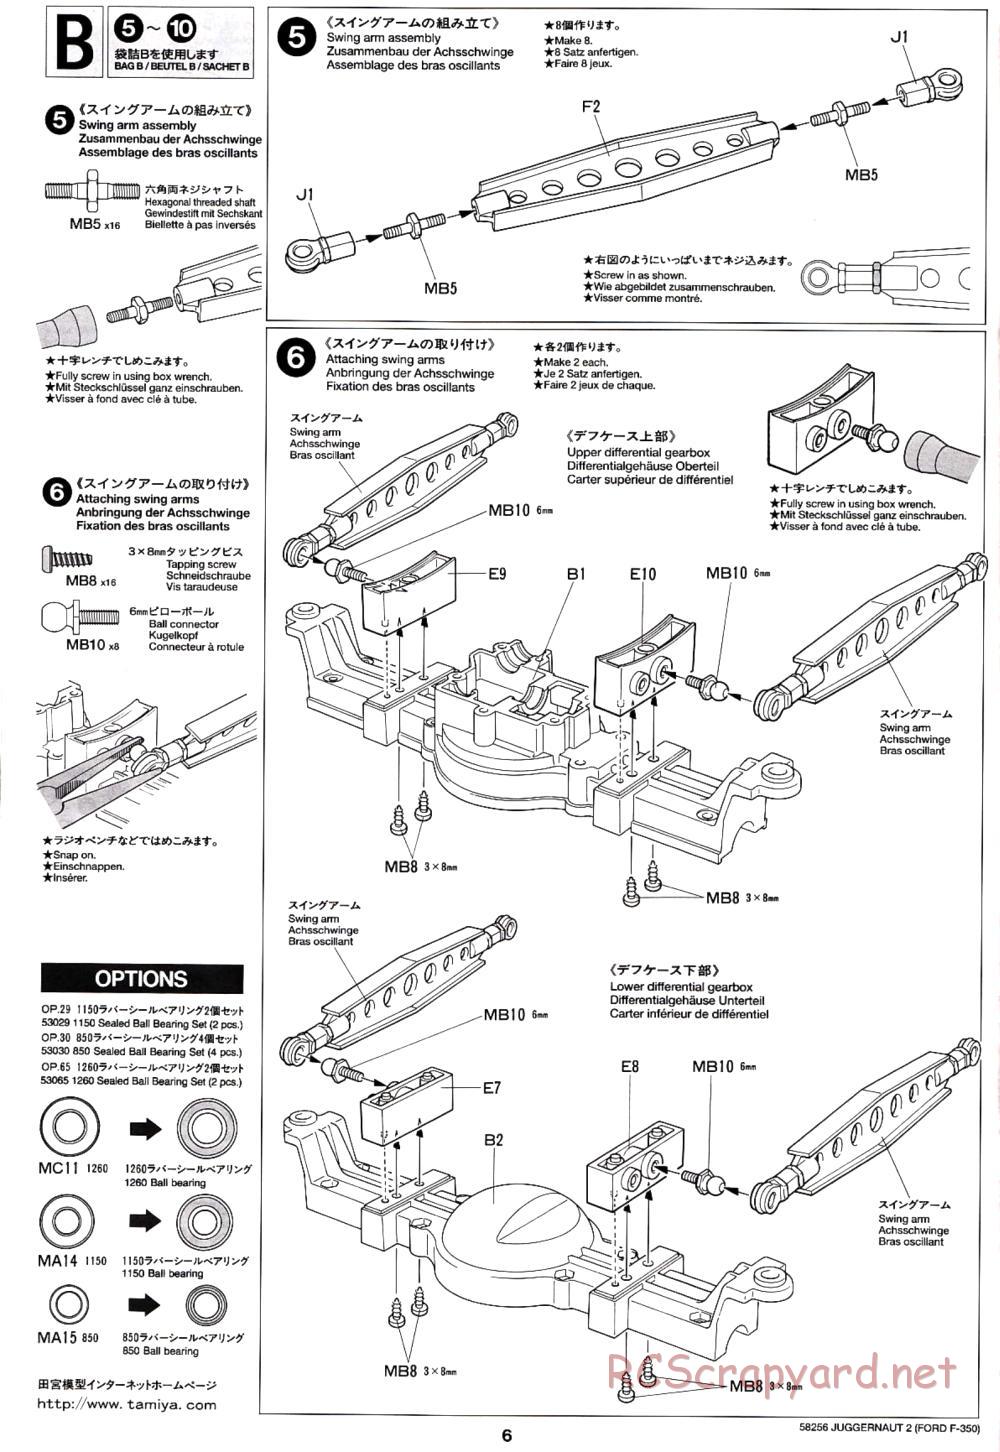 Tamiya - Juggernaut 2 Chassis - Manual - Page 6